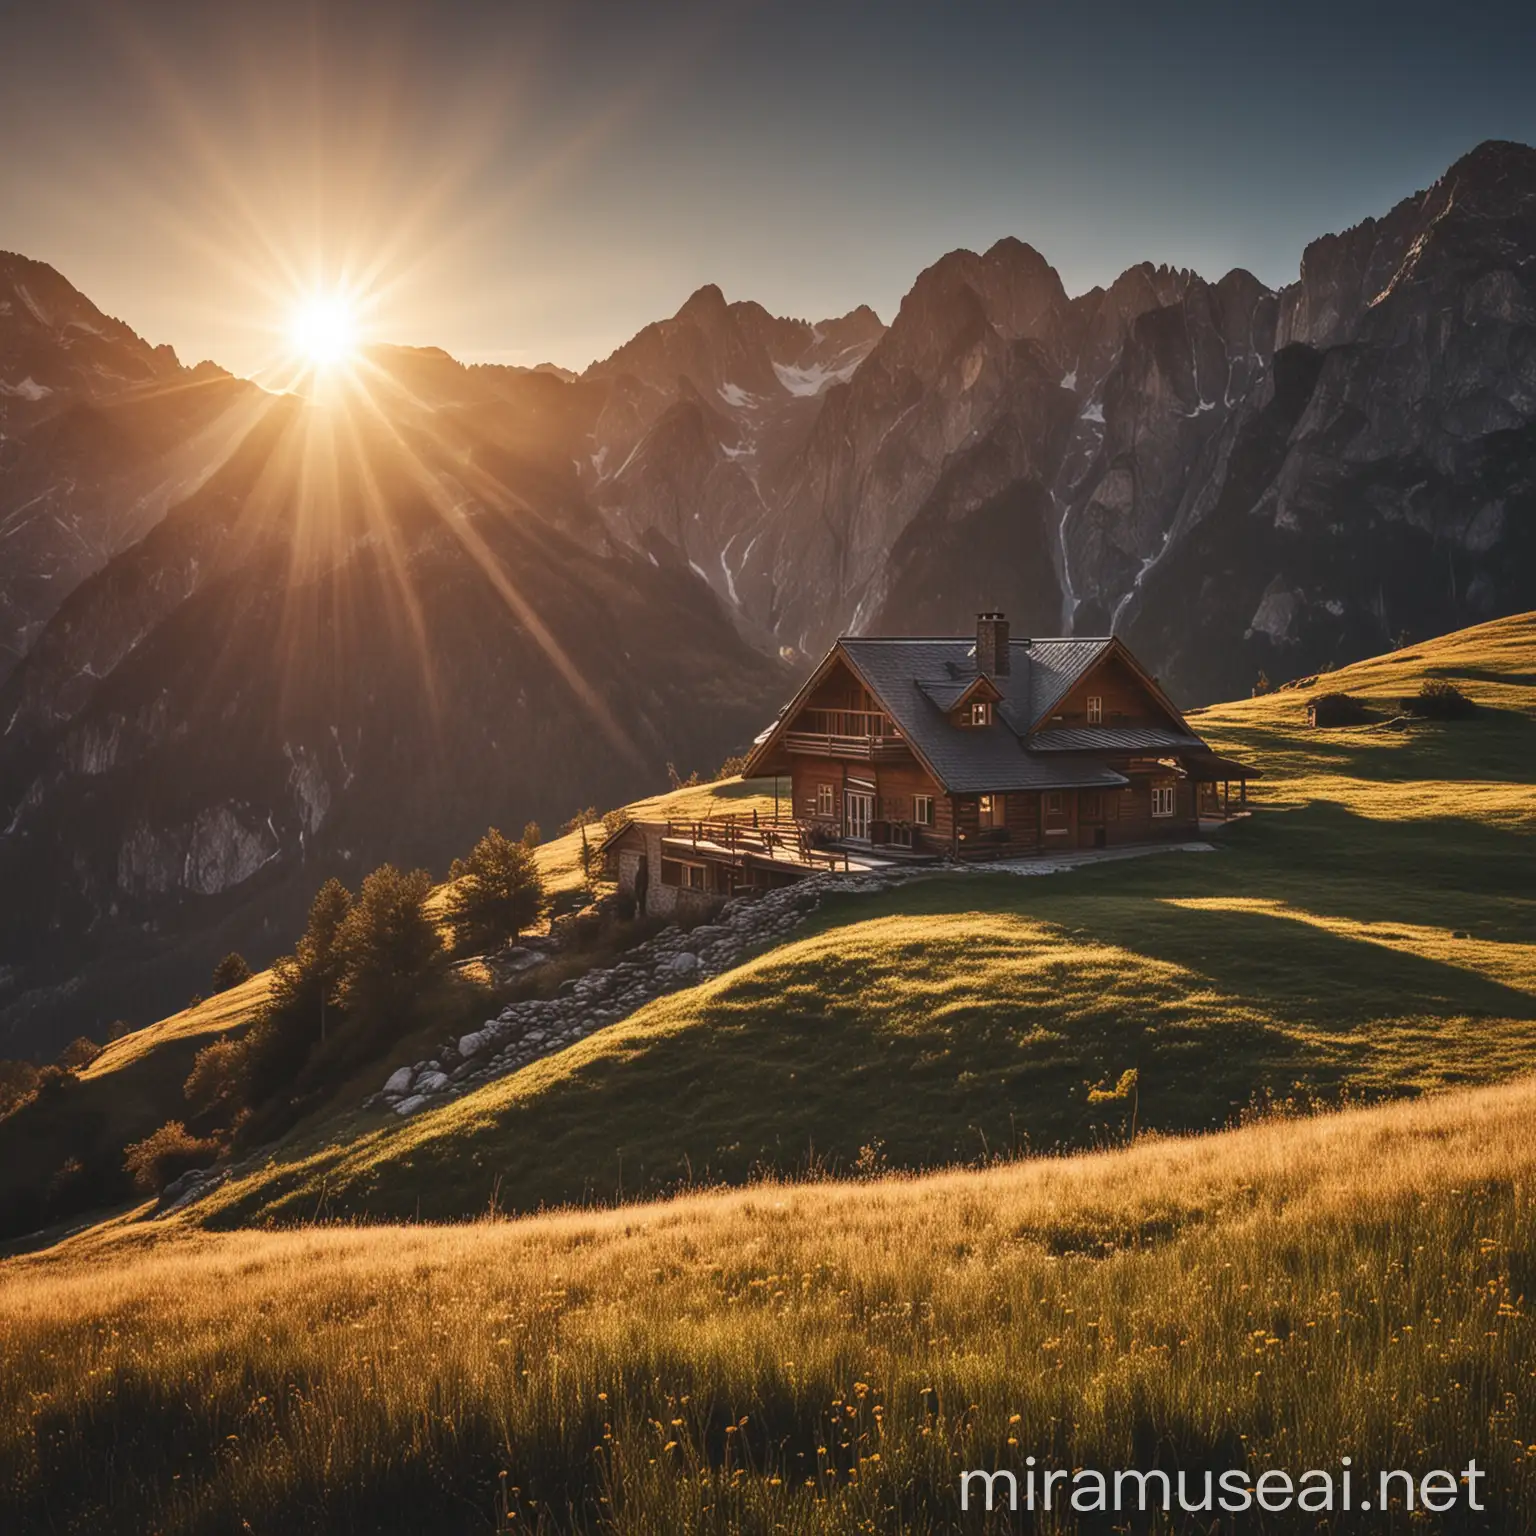 Mountains, house, sun